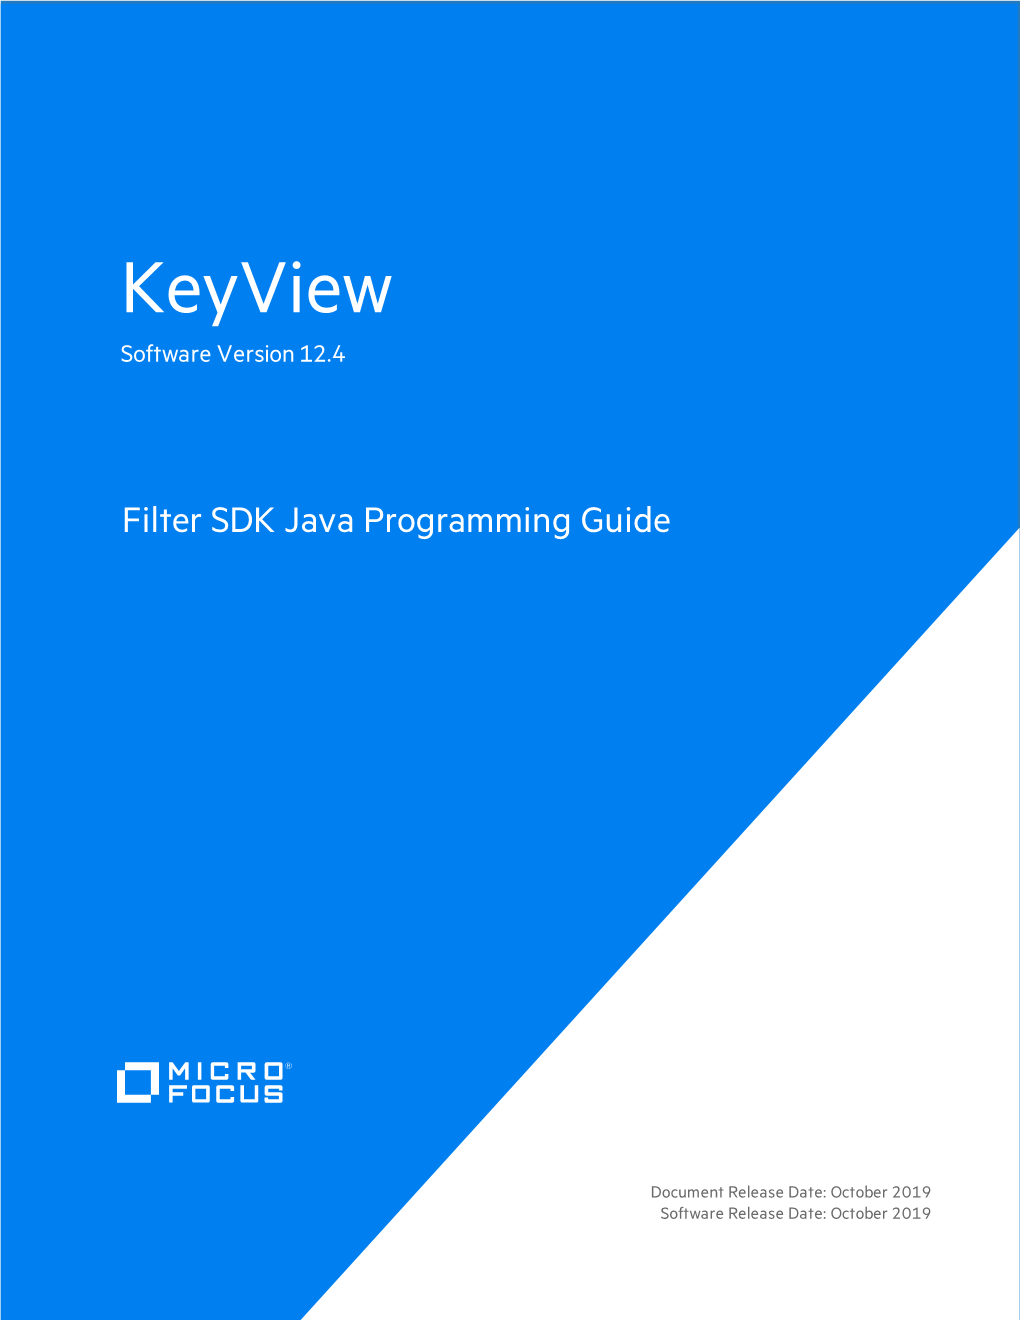 IDOL Keyview Filter SDK 12.4 Java Programming Guide